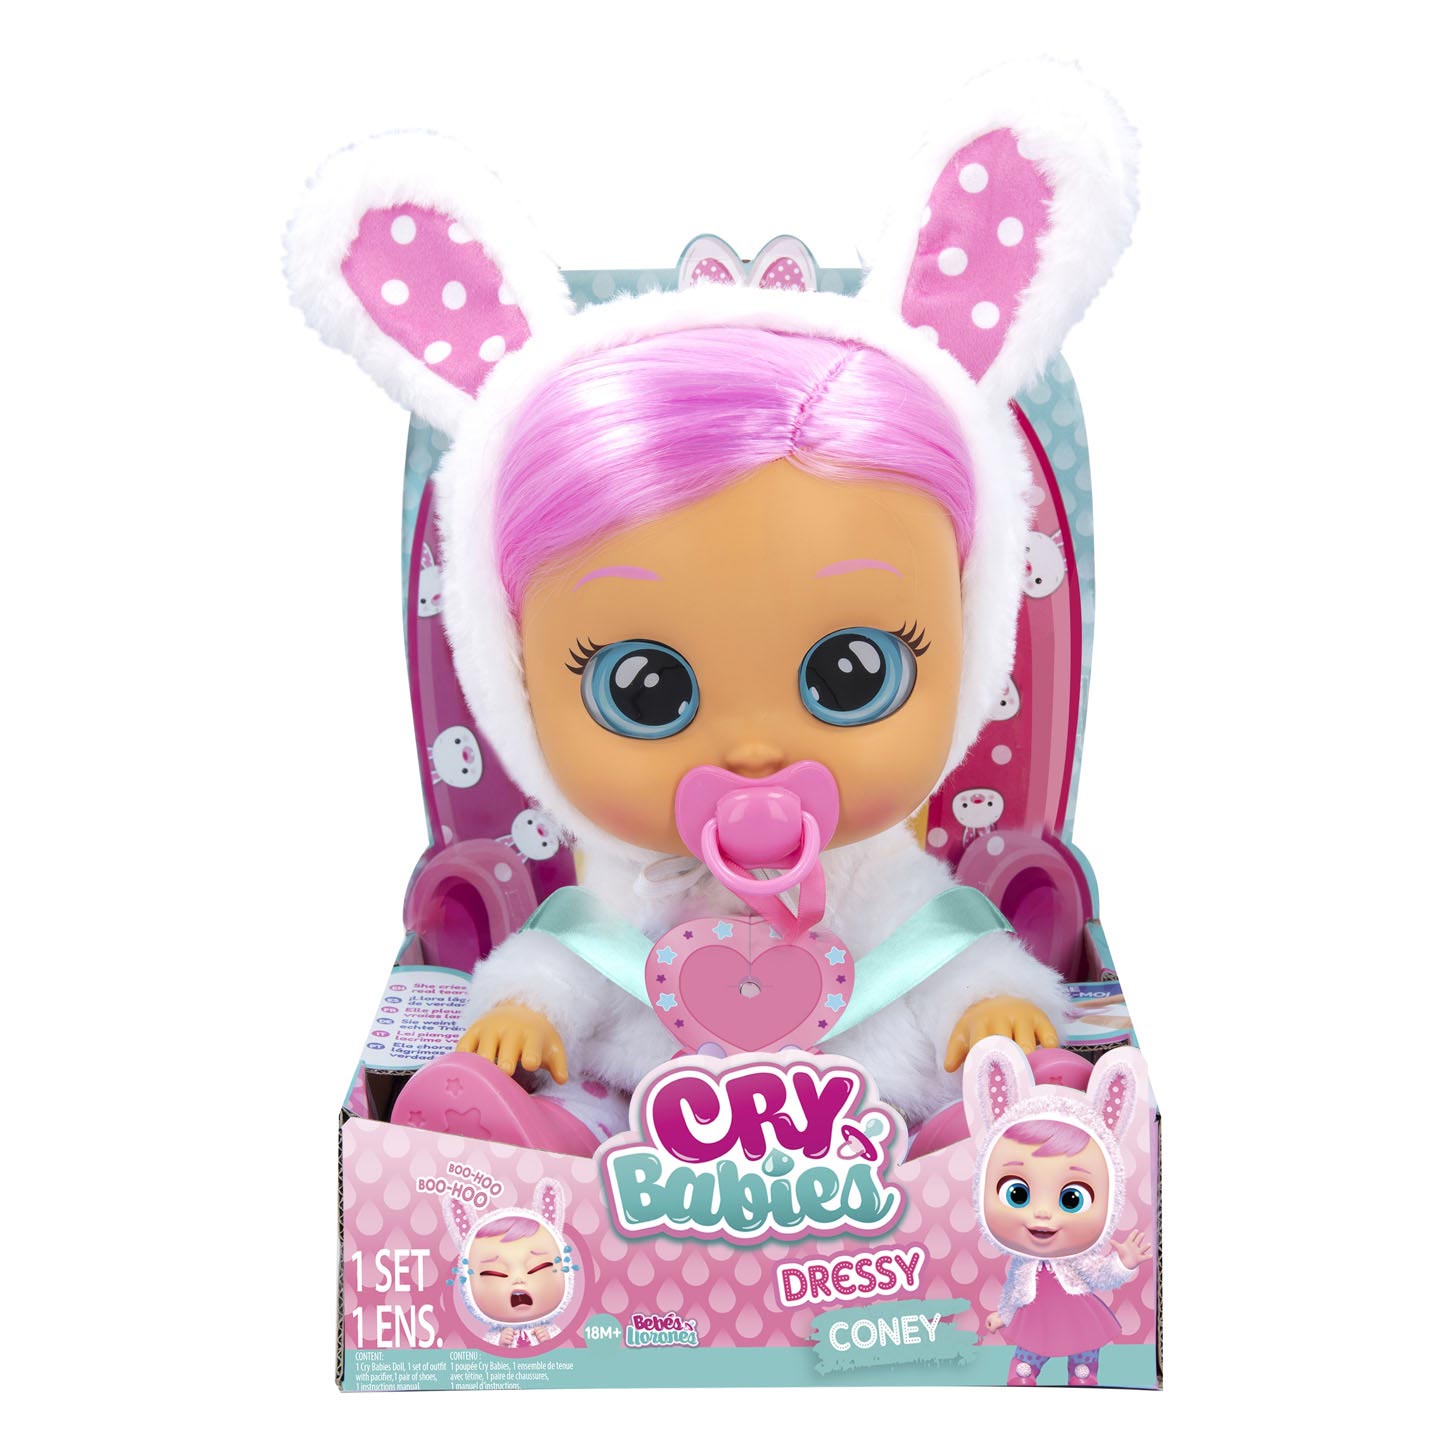 Proficiat Veronderstellen les Cry Babies Dressy Coney Crying Doll | Thimble Toys